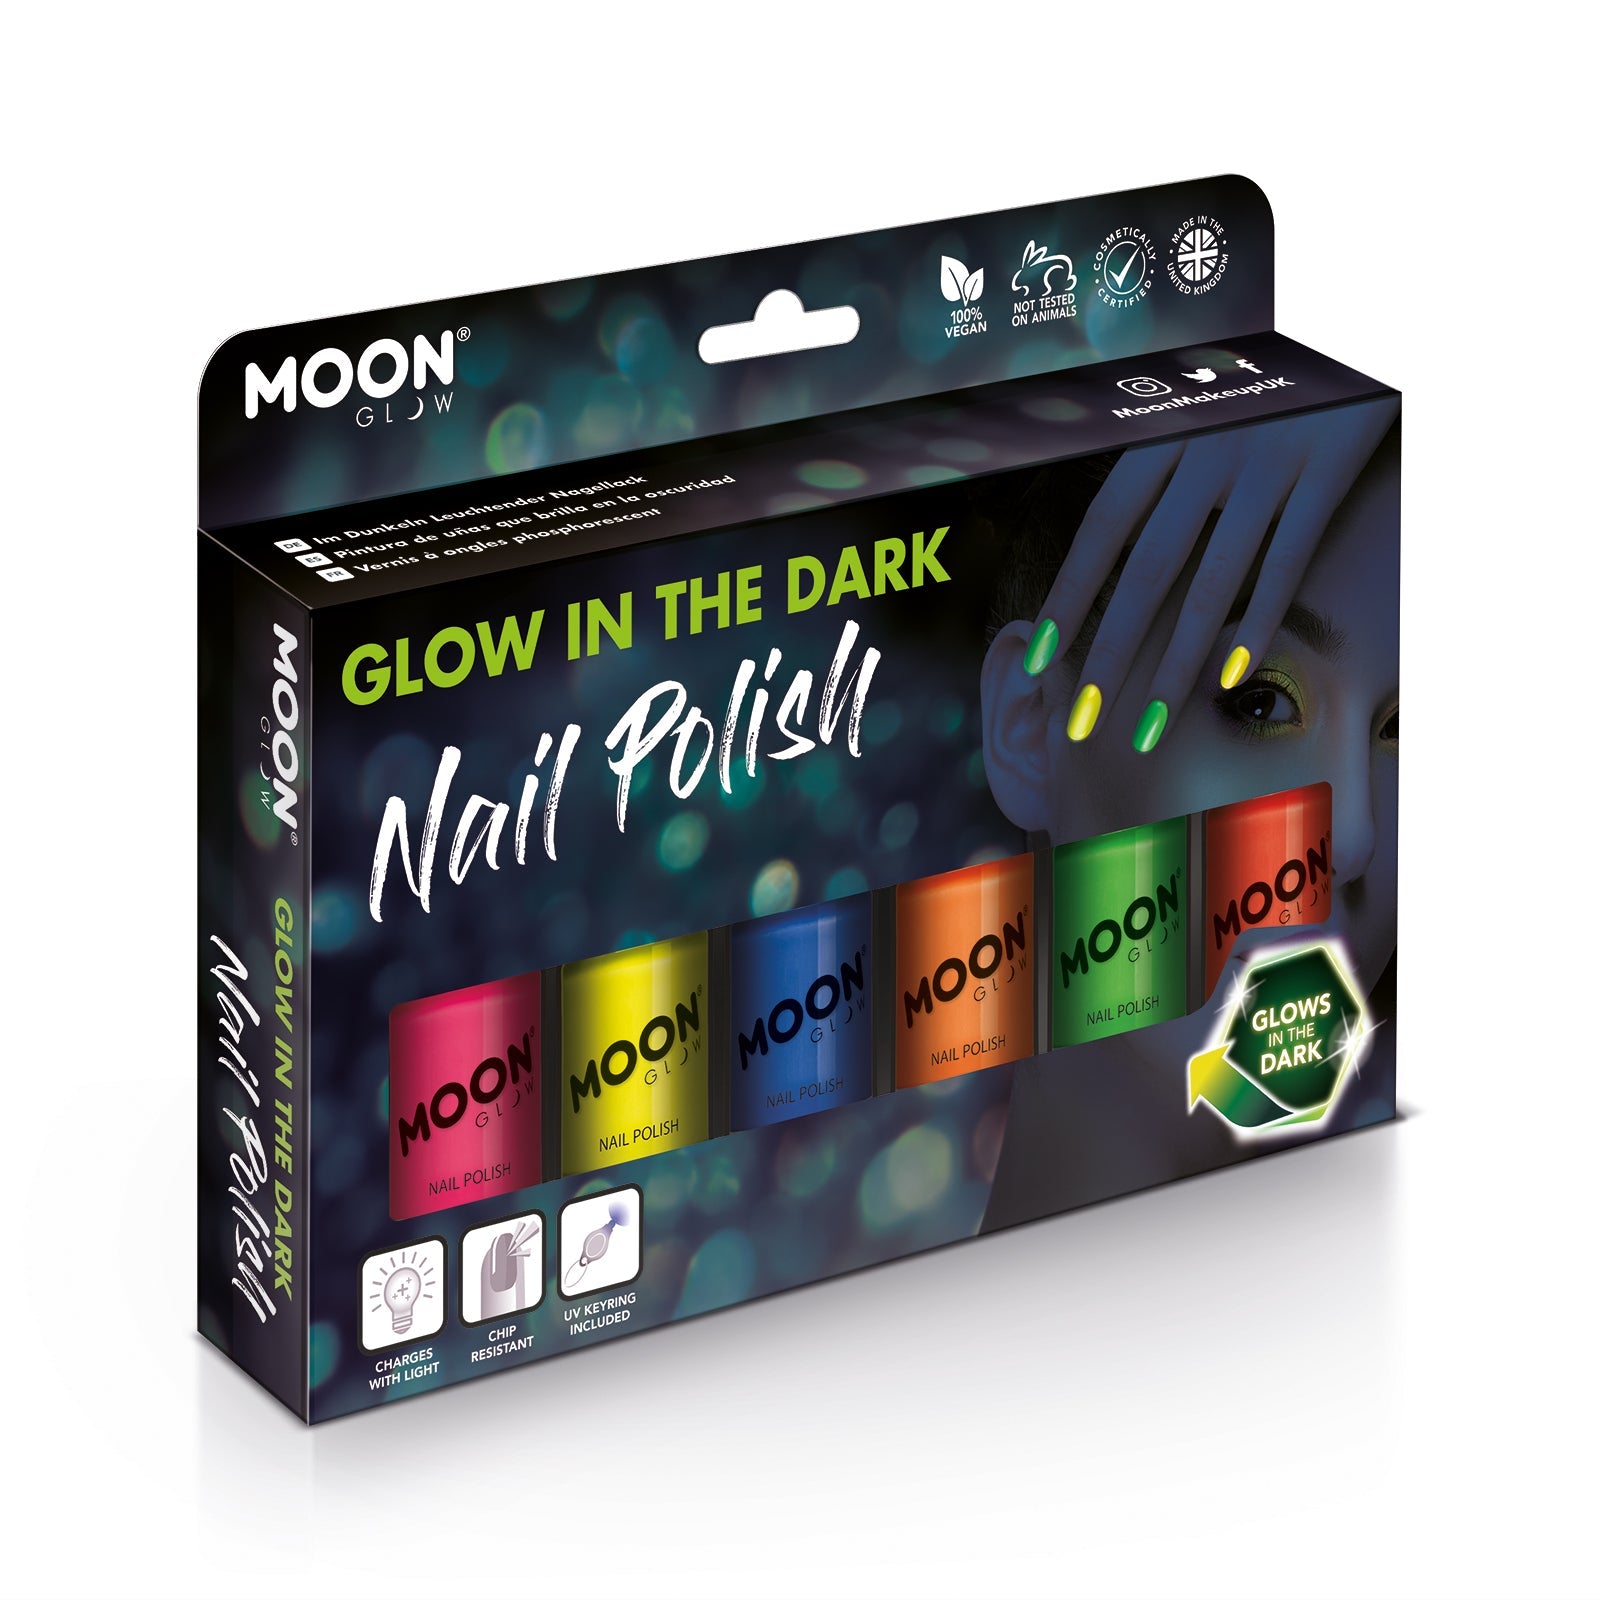 Glow in the Dark Nail Polish Boxset. Cosmetically certified, FDA & Health Canada compliant, cruelty free and vegan.